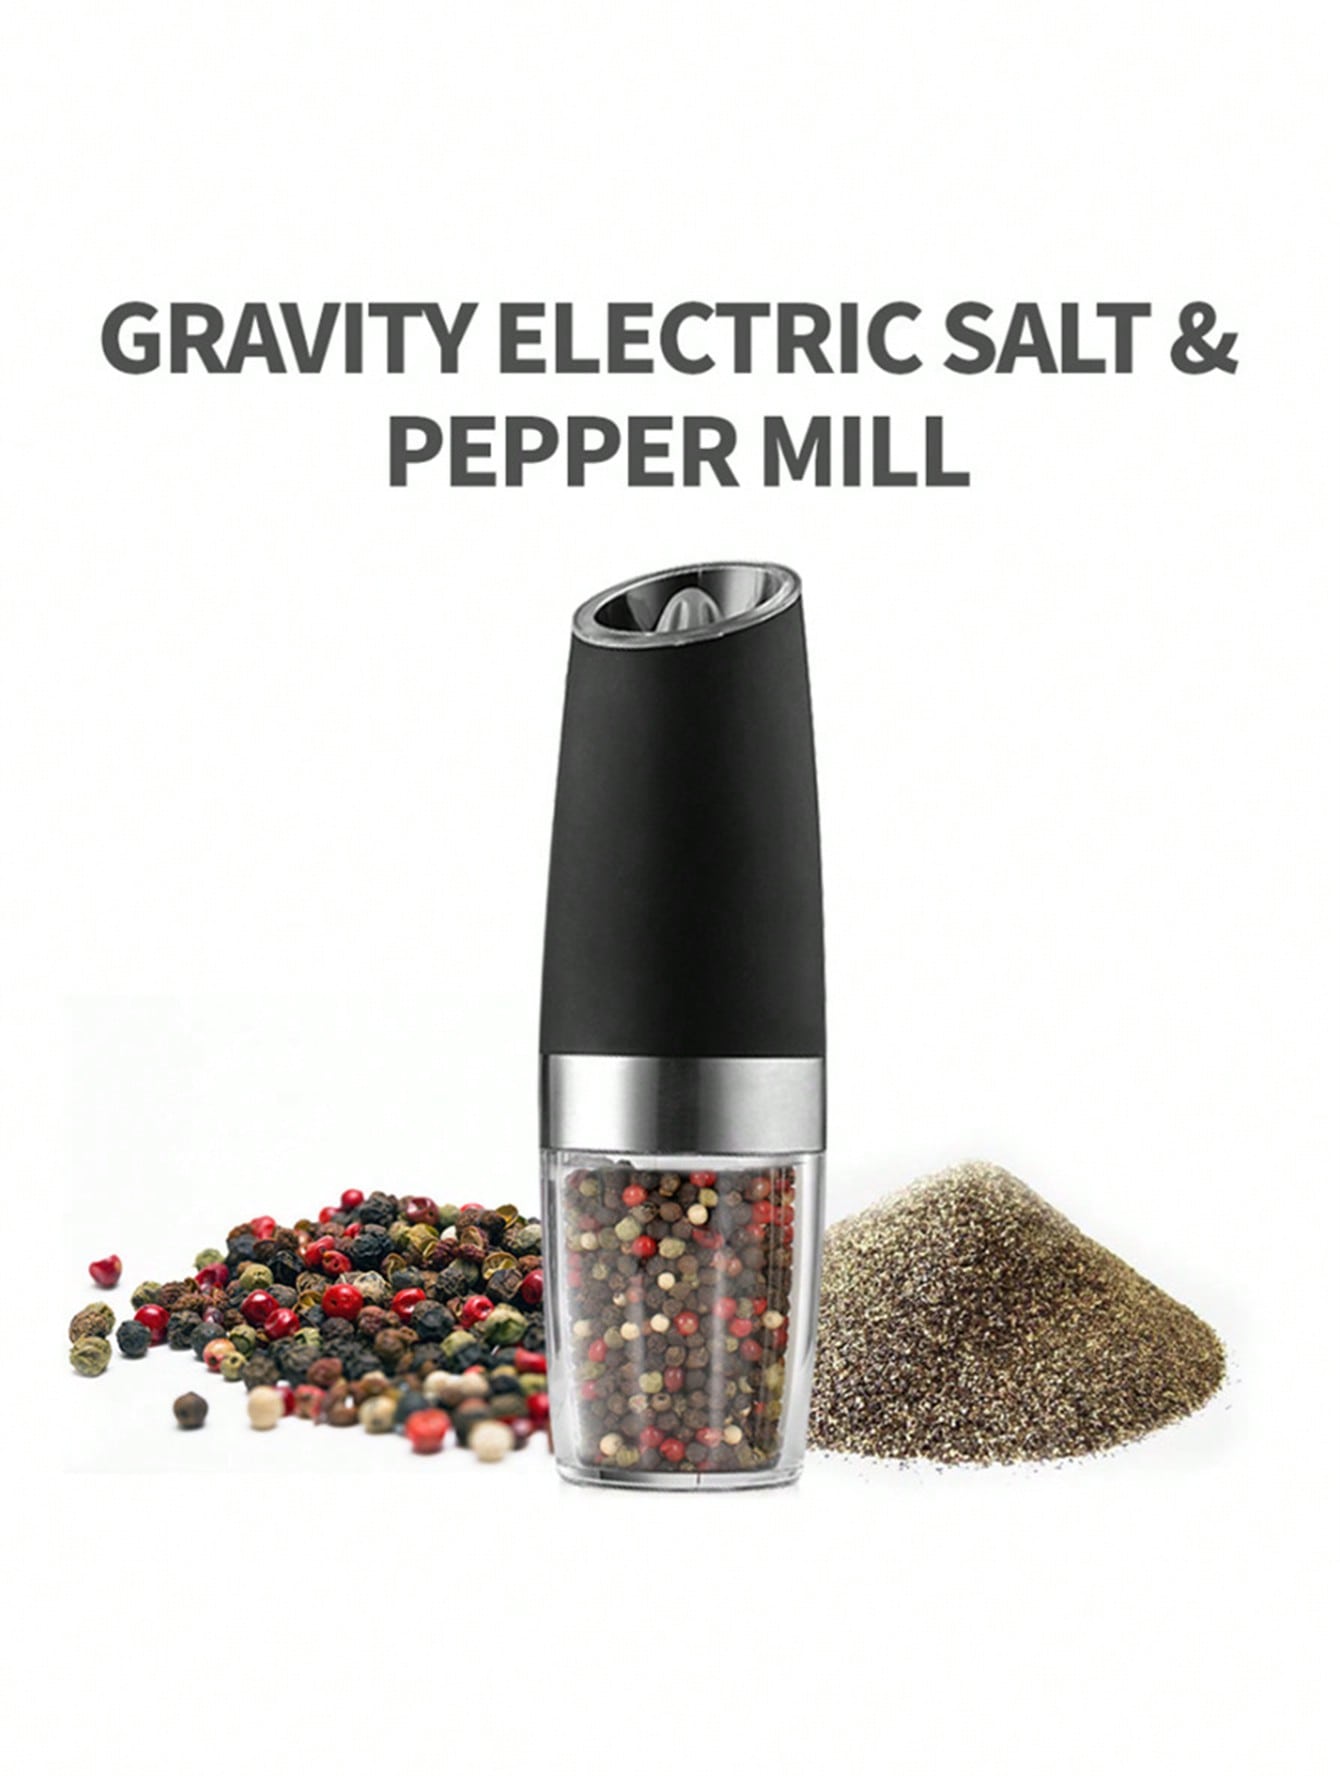 Modern Electric Salt And Pepper Grinder Powered Gravity Sensor